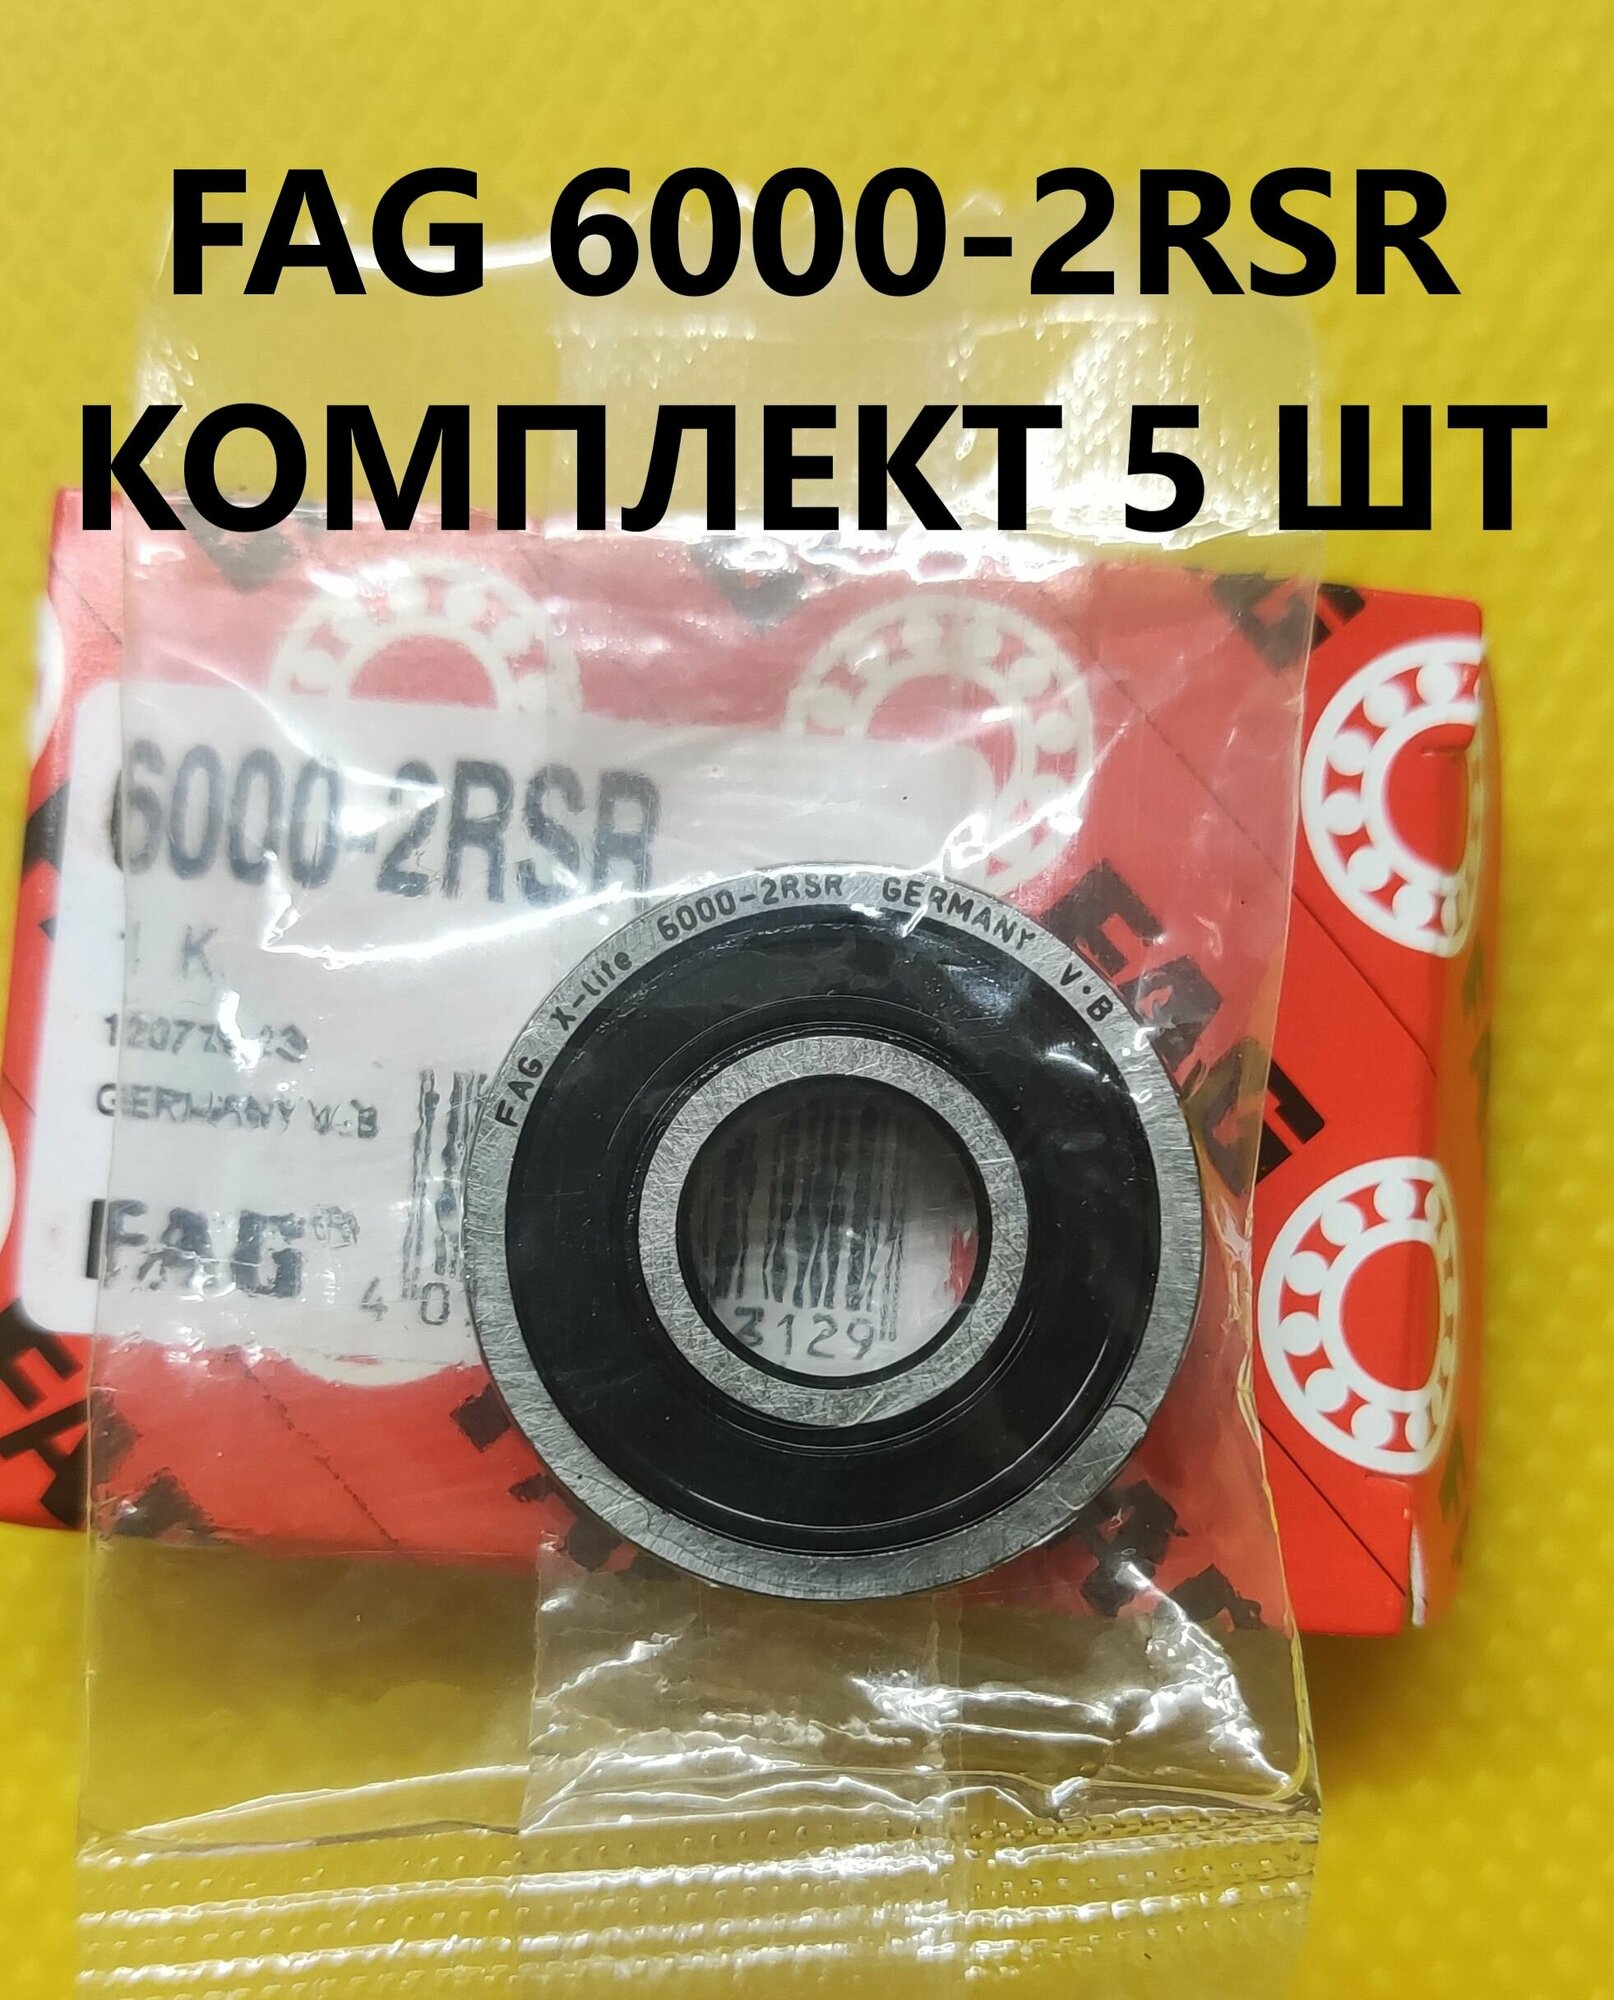 Подшипник FAG 6000-2RSR (10x26x8) комплект 5 шт